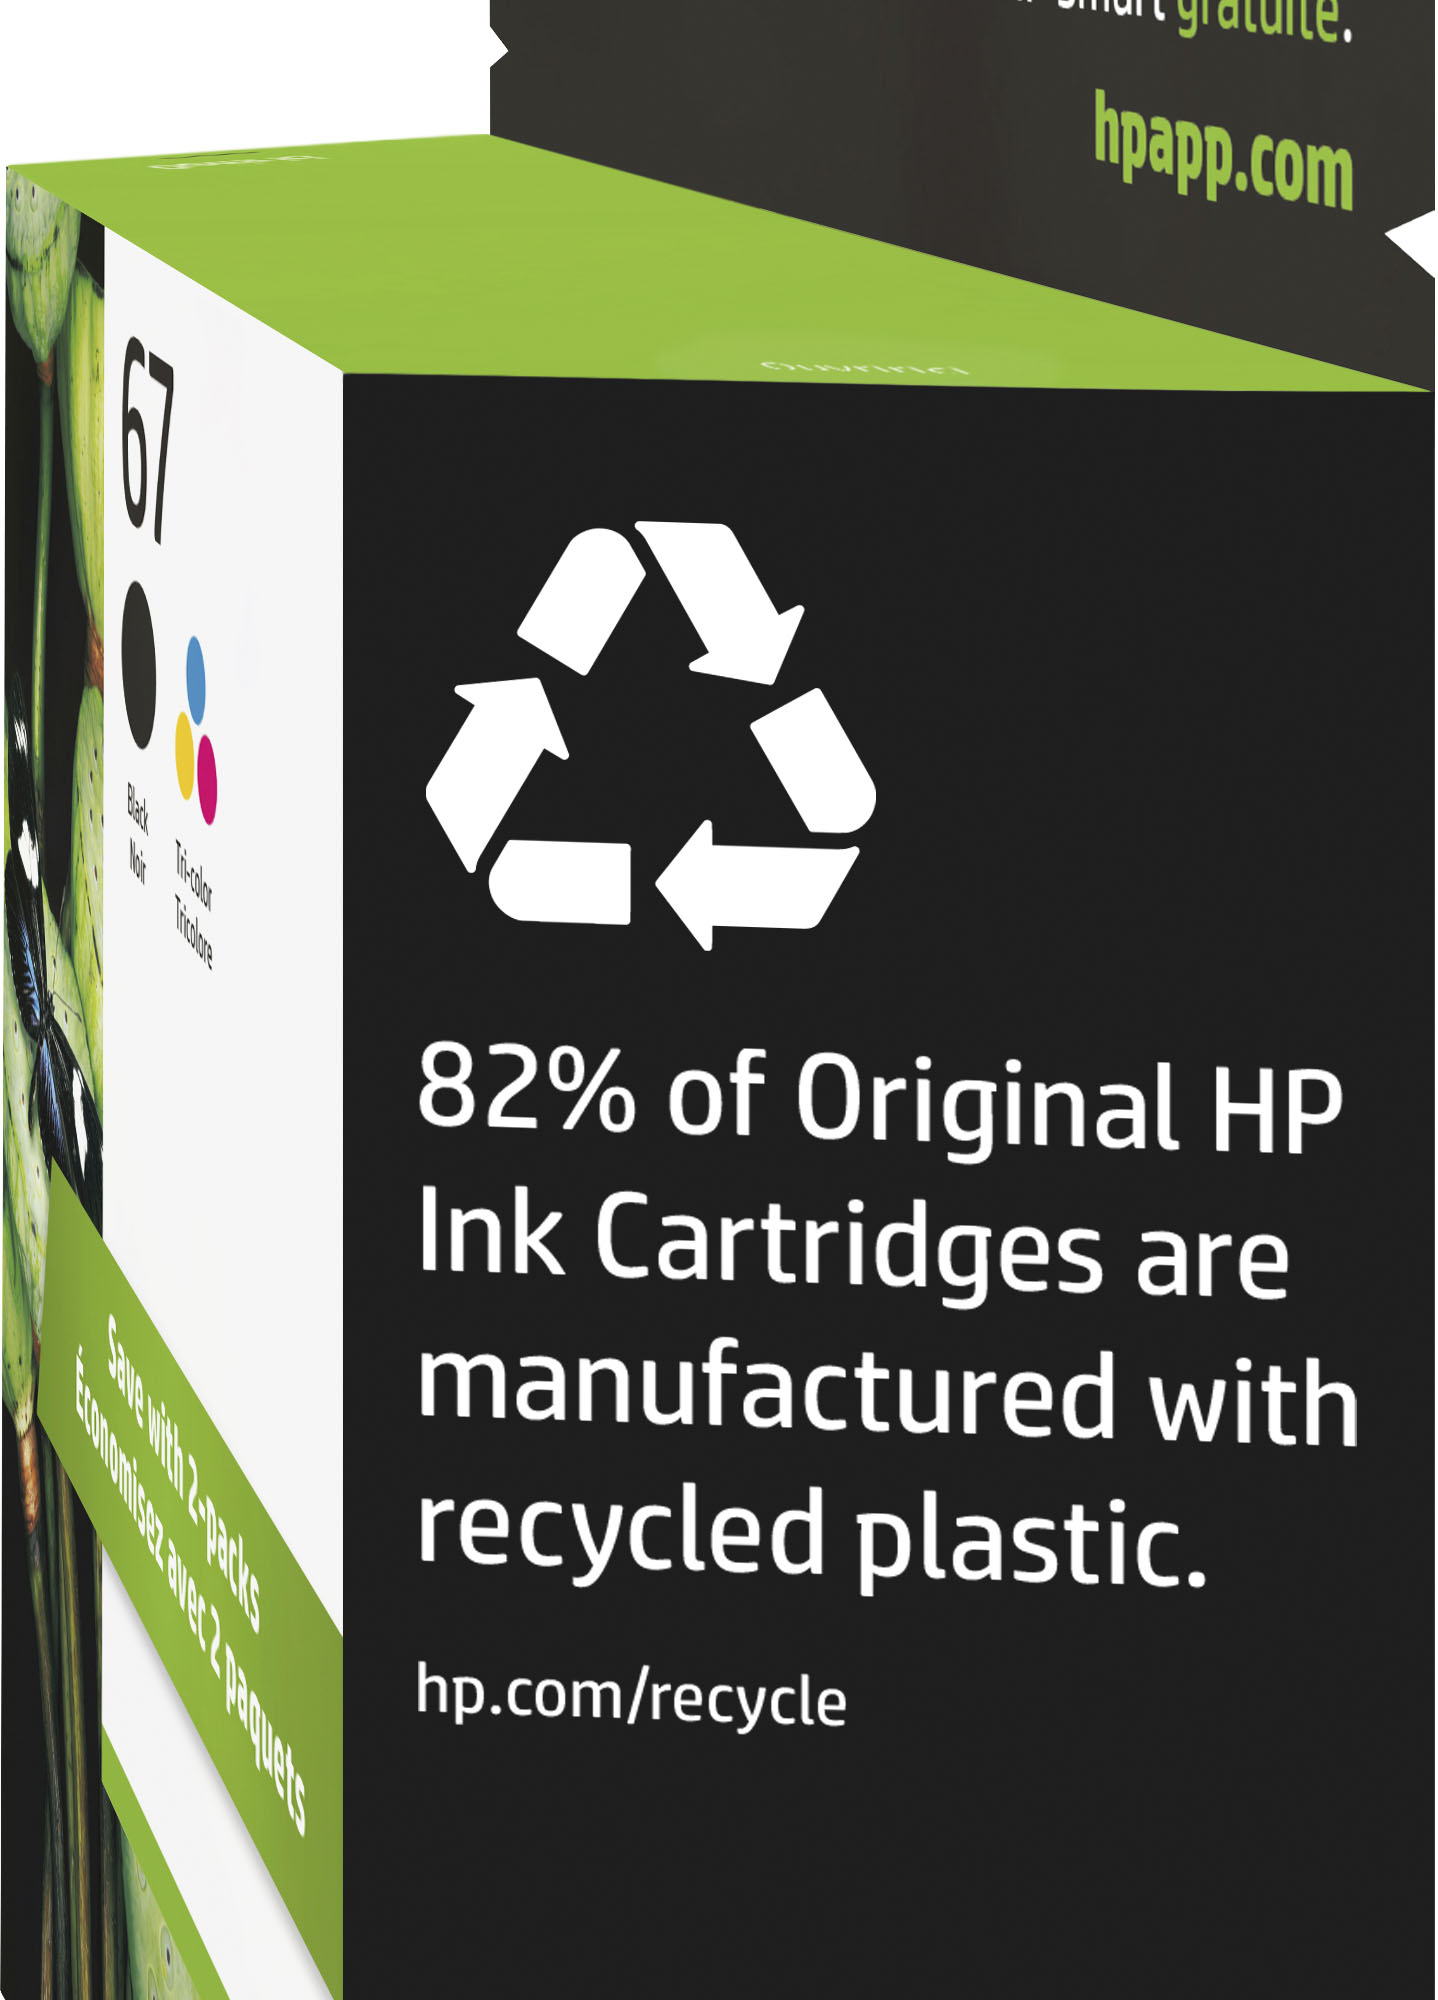 HP 304XL Full Set Original High Capacity Inks 